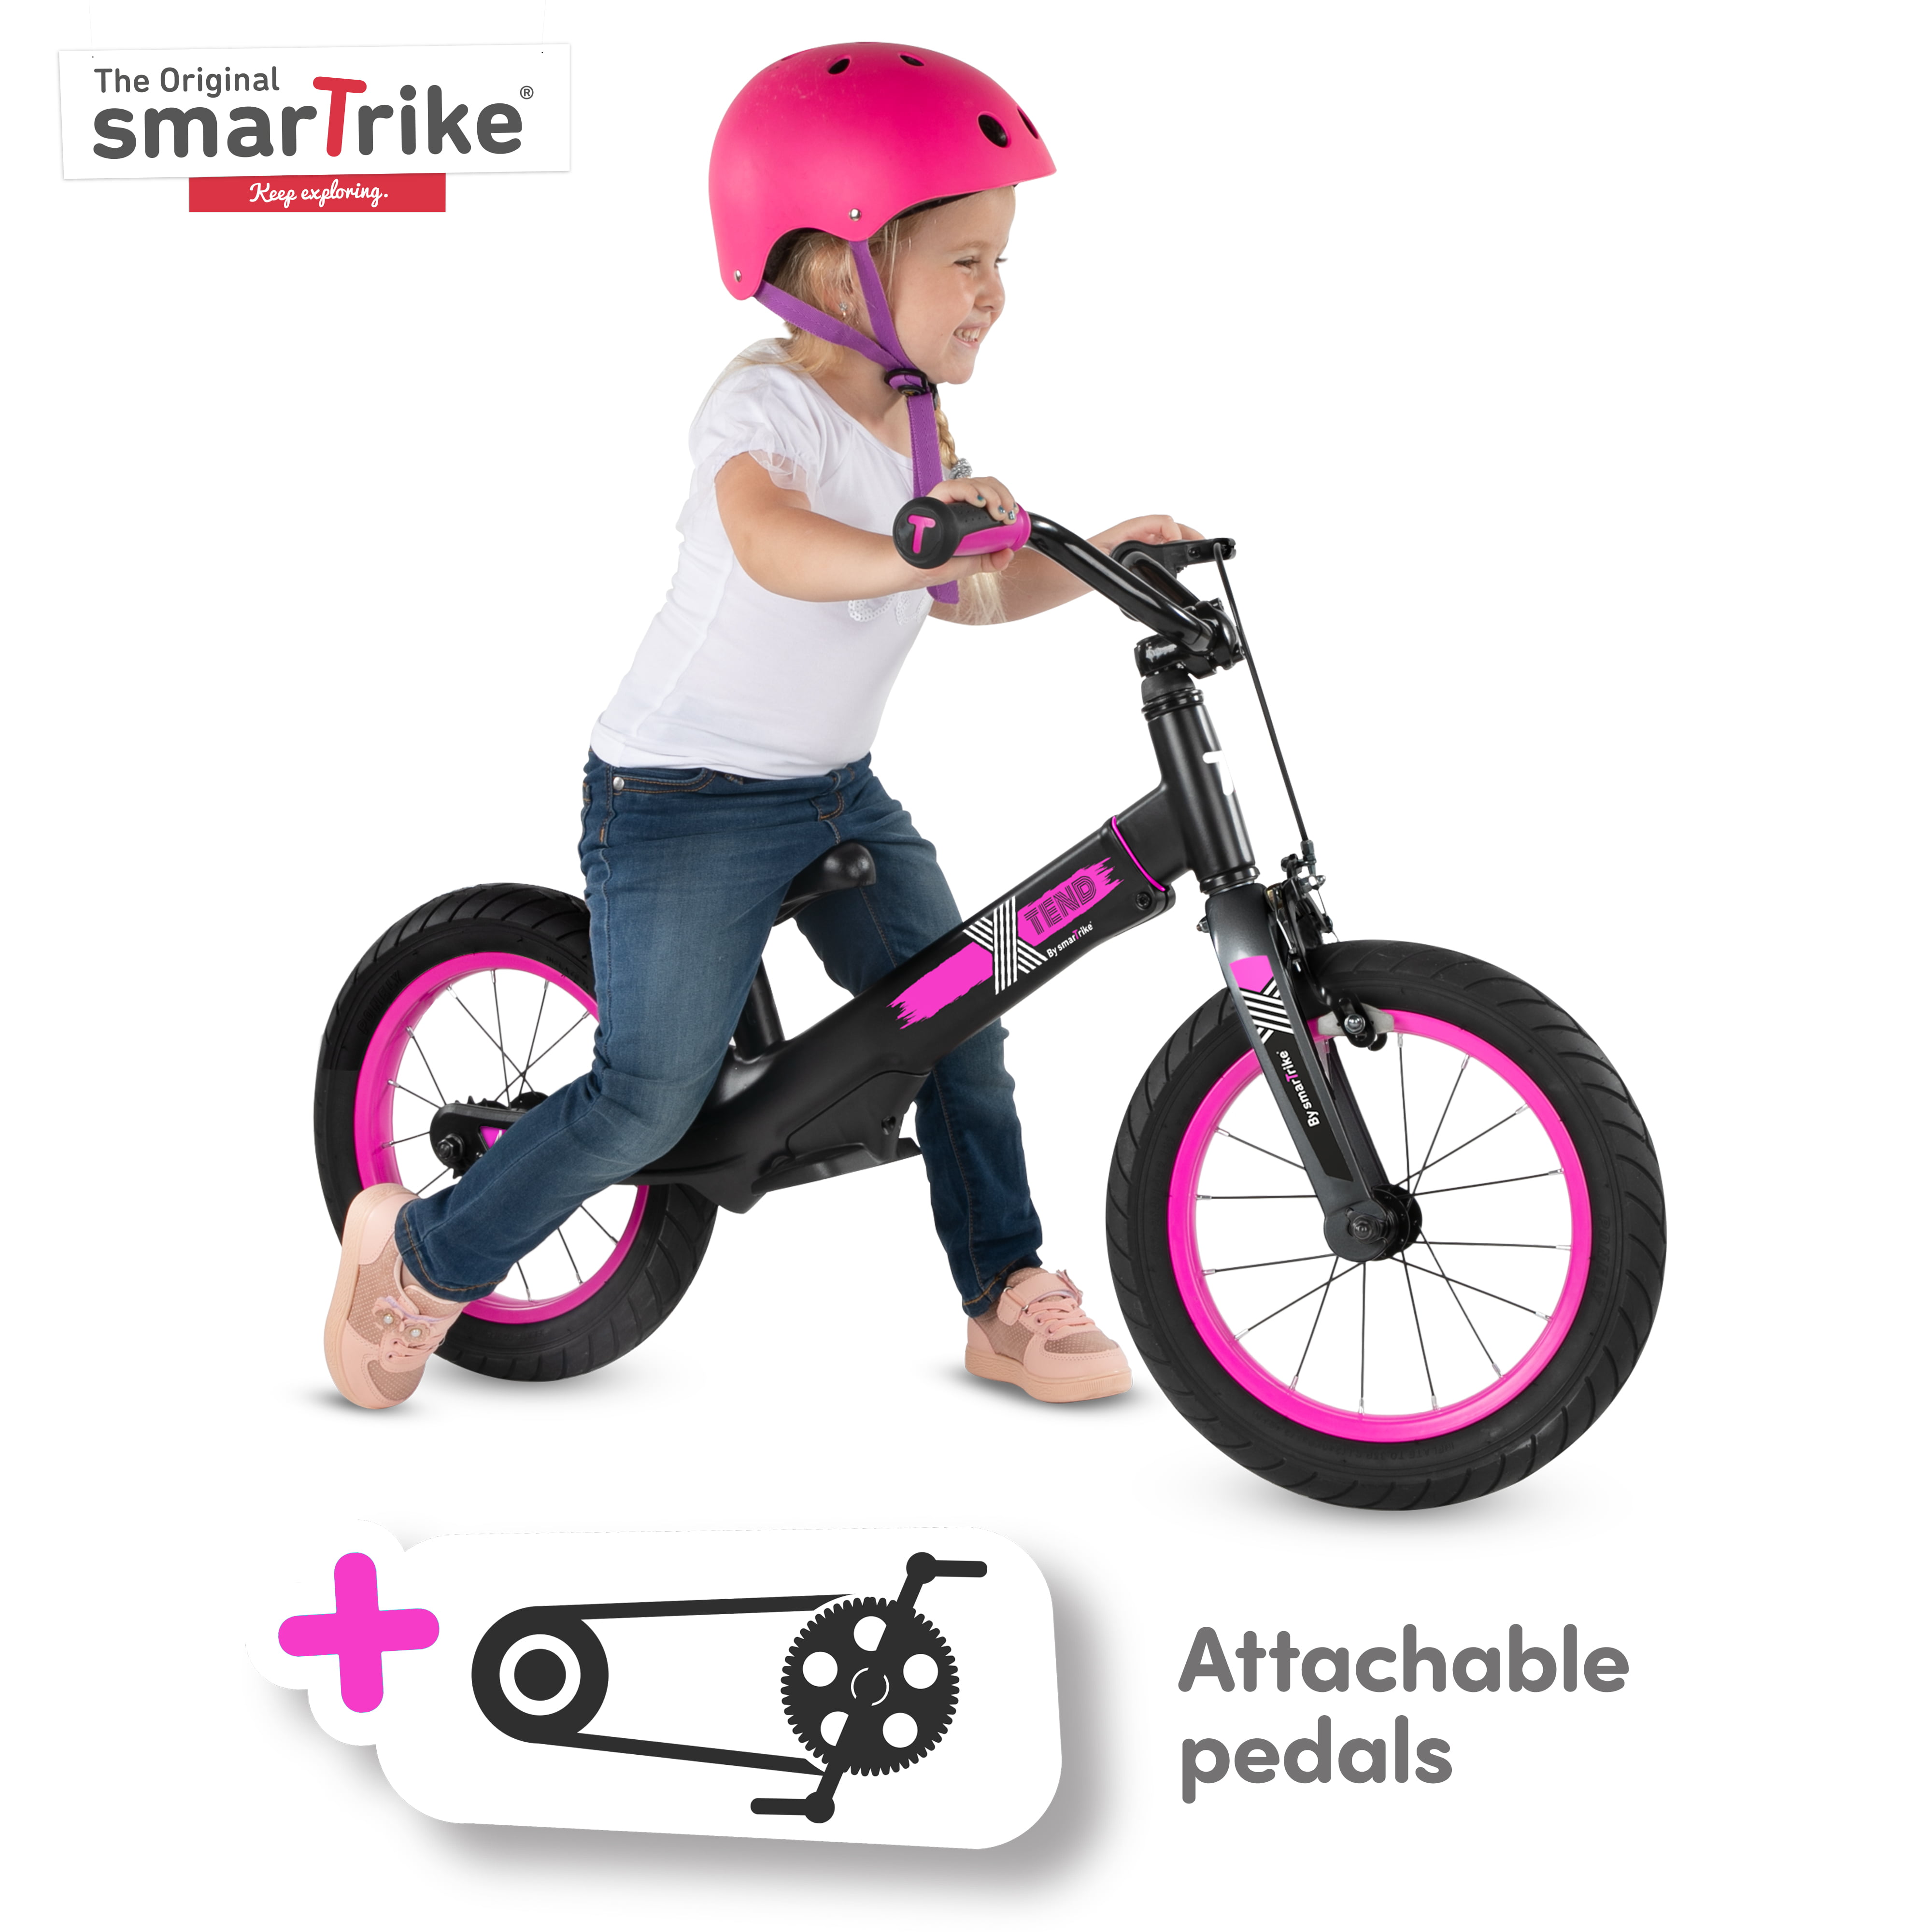 smartrike 3 in 1 balance bike